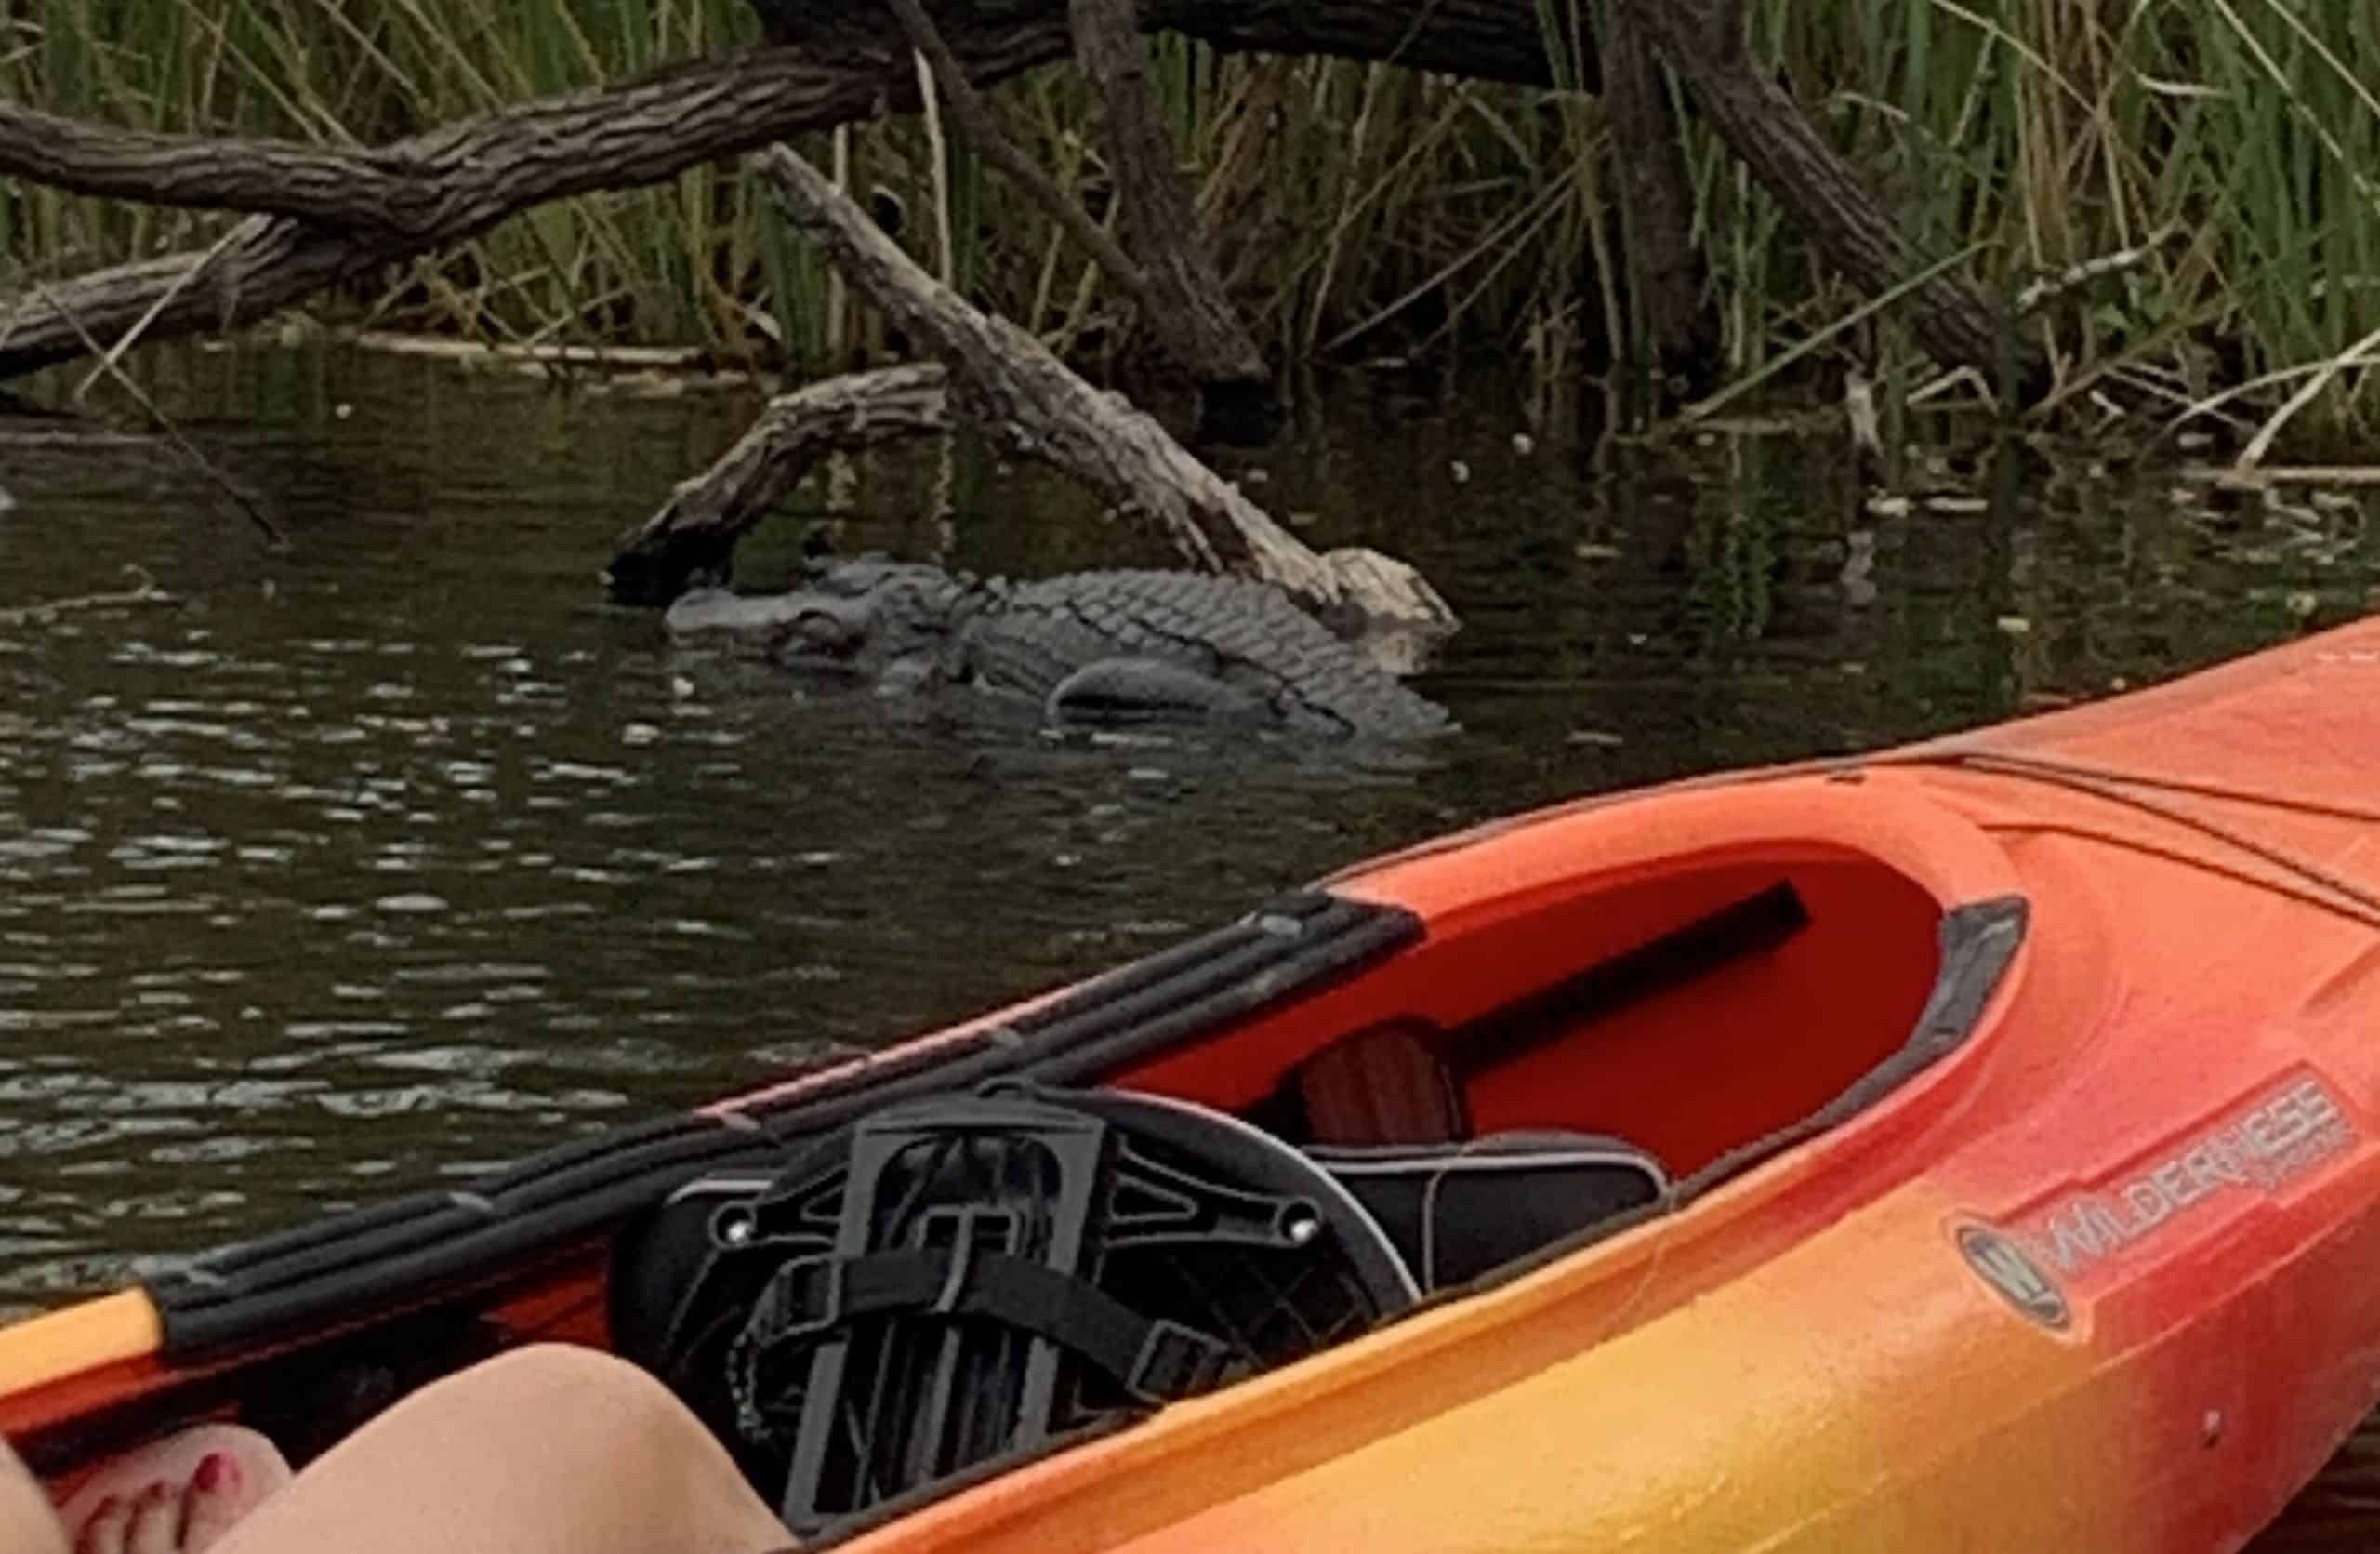 Kayaking with alligators